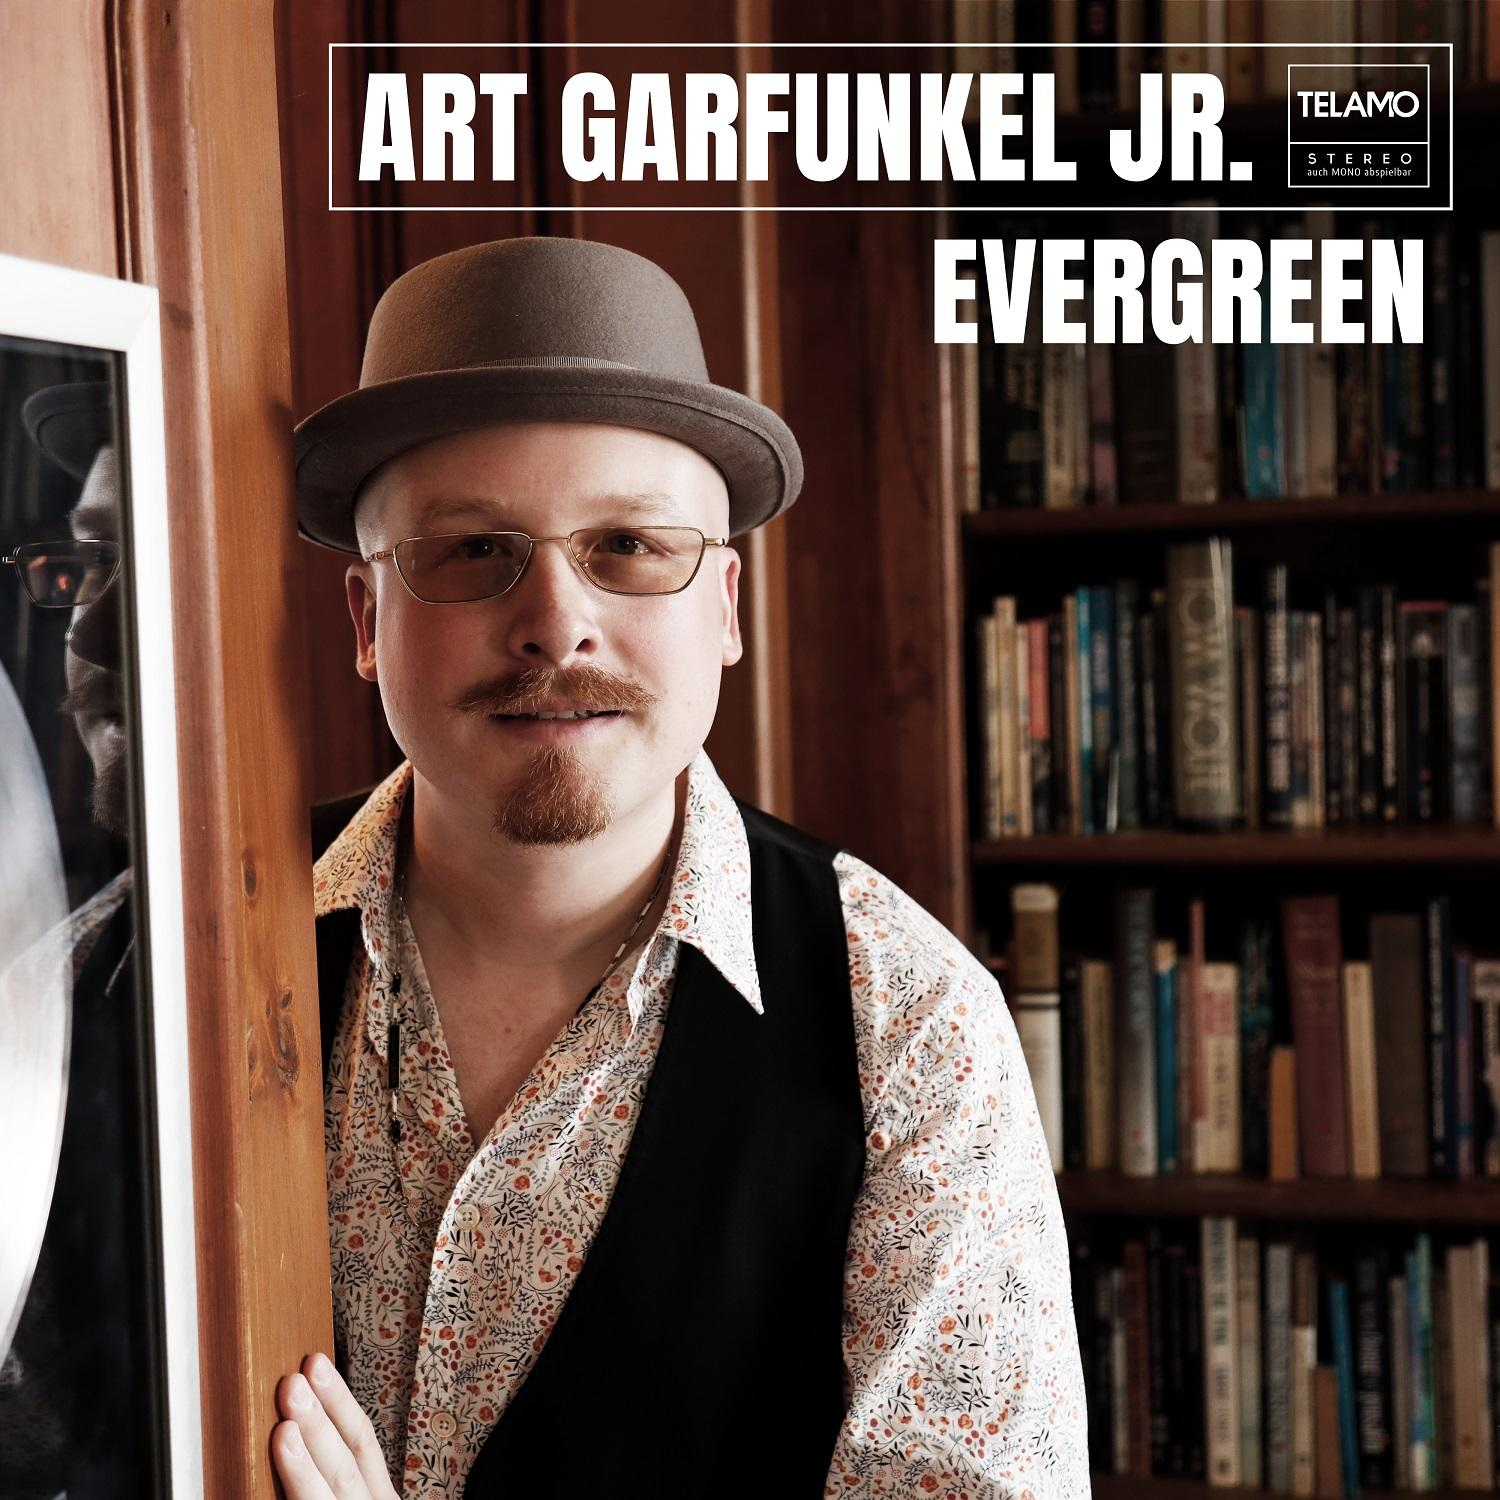 Art Garfunkel (CD) Jr. - - Evergreen